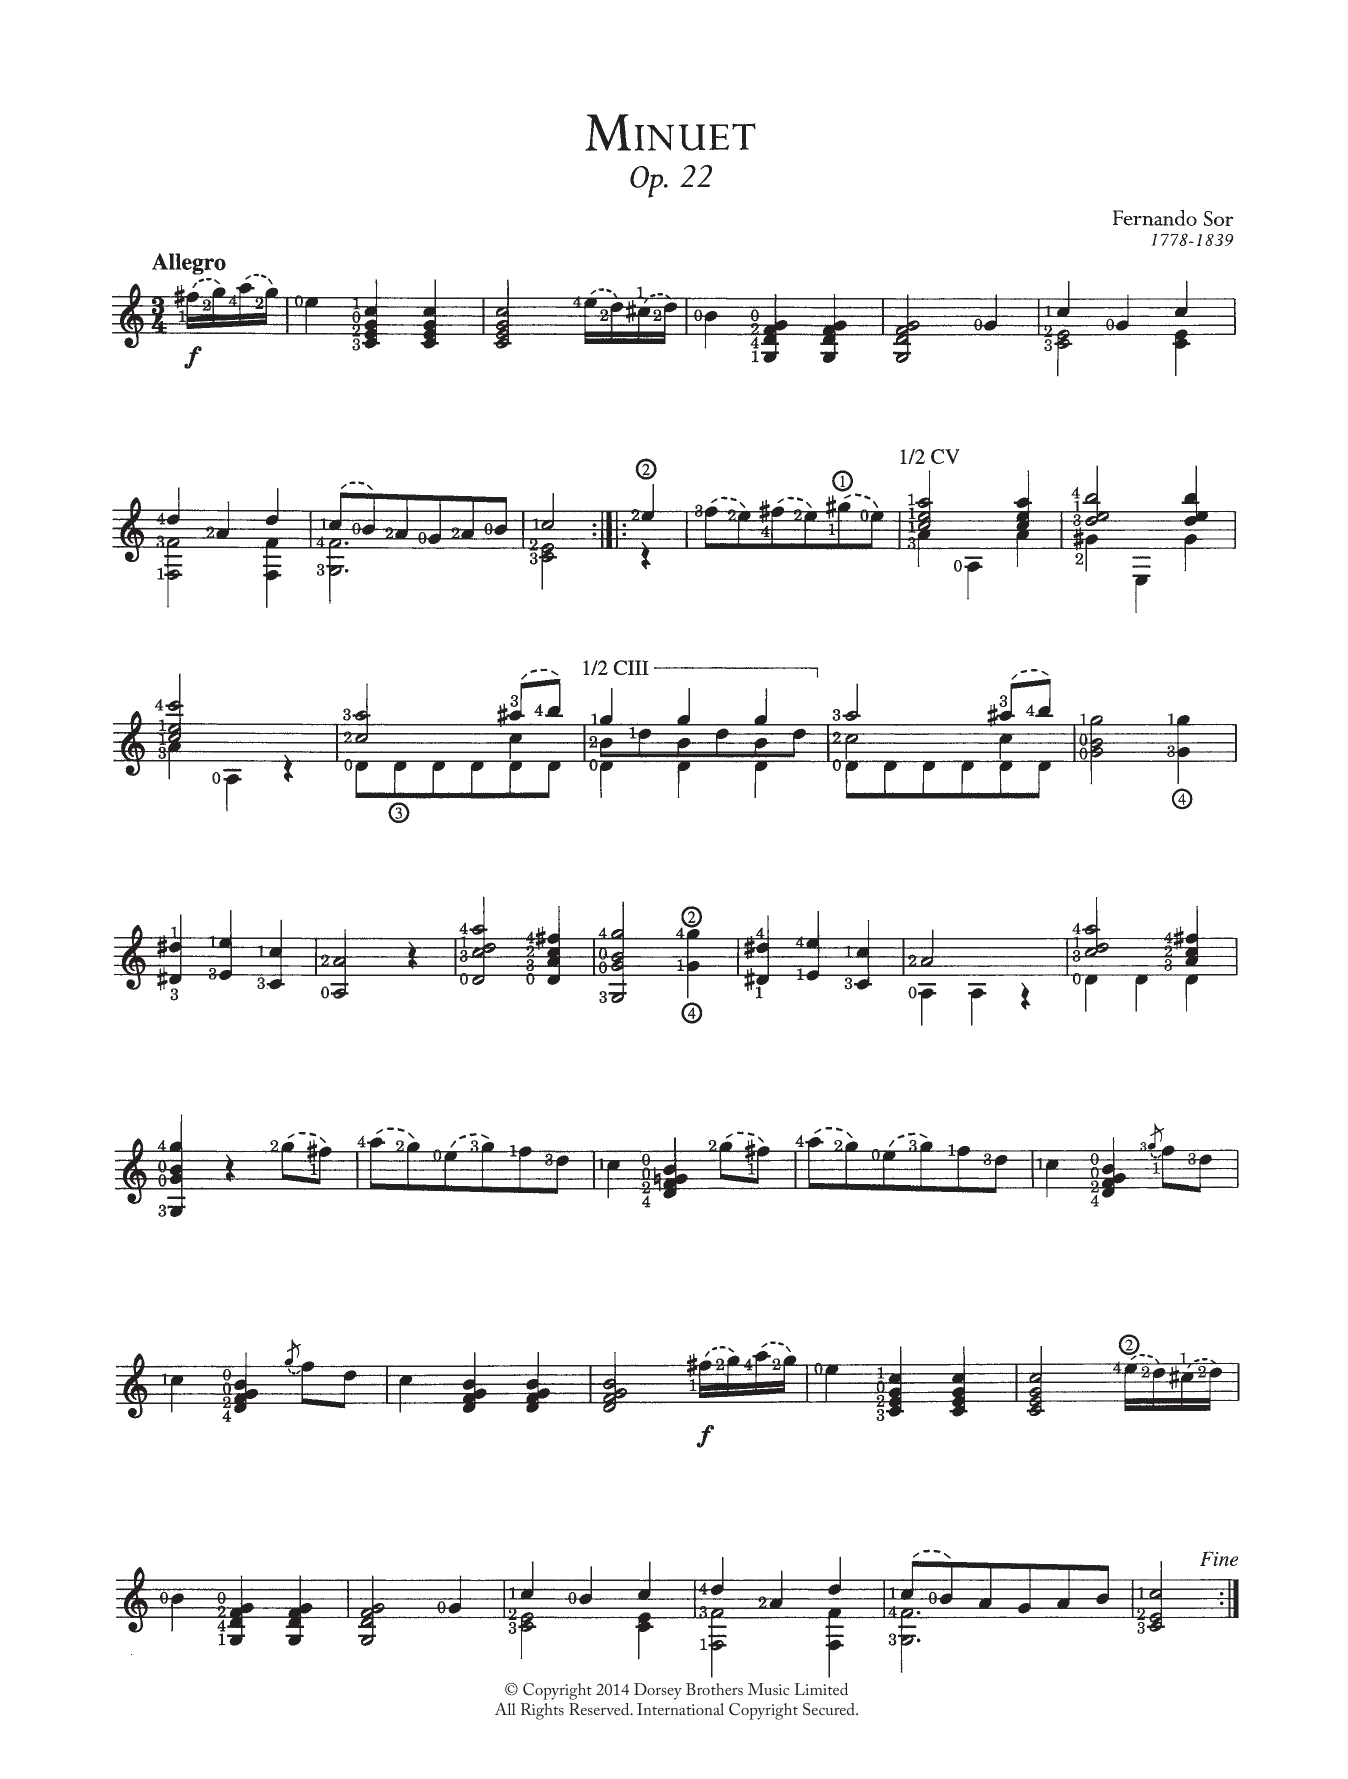 Fernando Sor Minuet, Op.22 sheet music notes and chords arranged for Solo Guitar